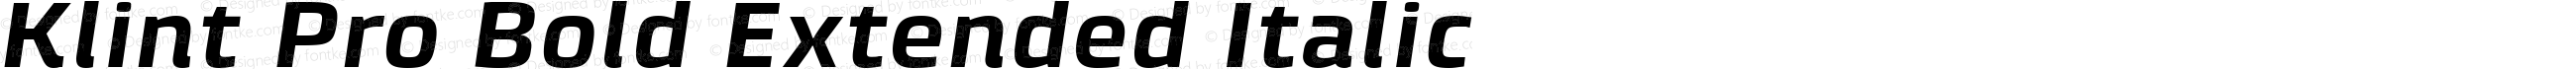 Klint Pro Bold Extended Italic